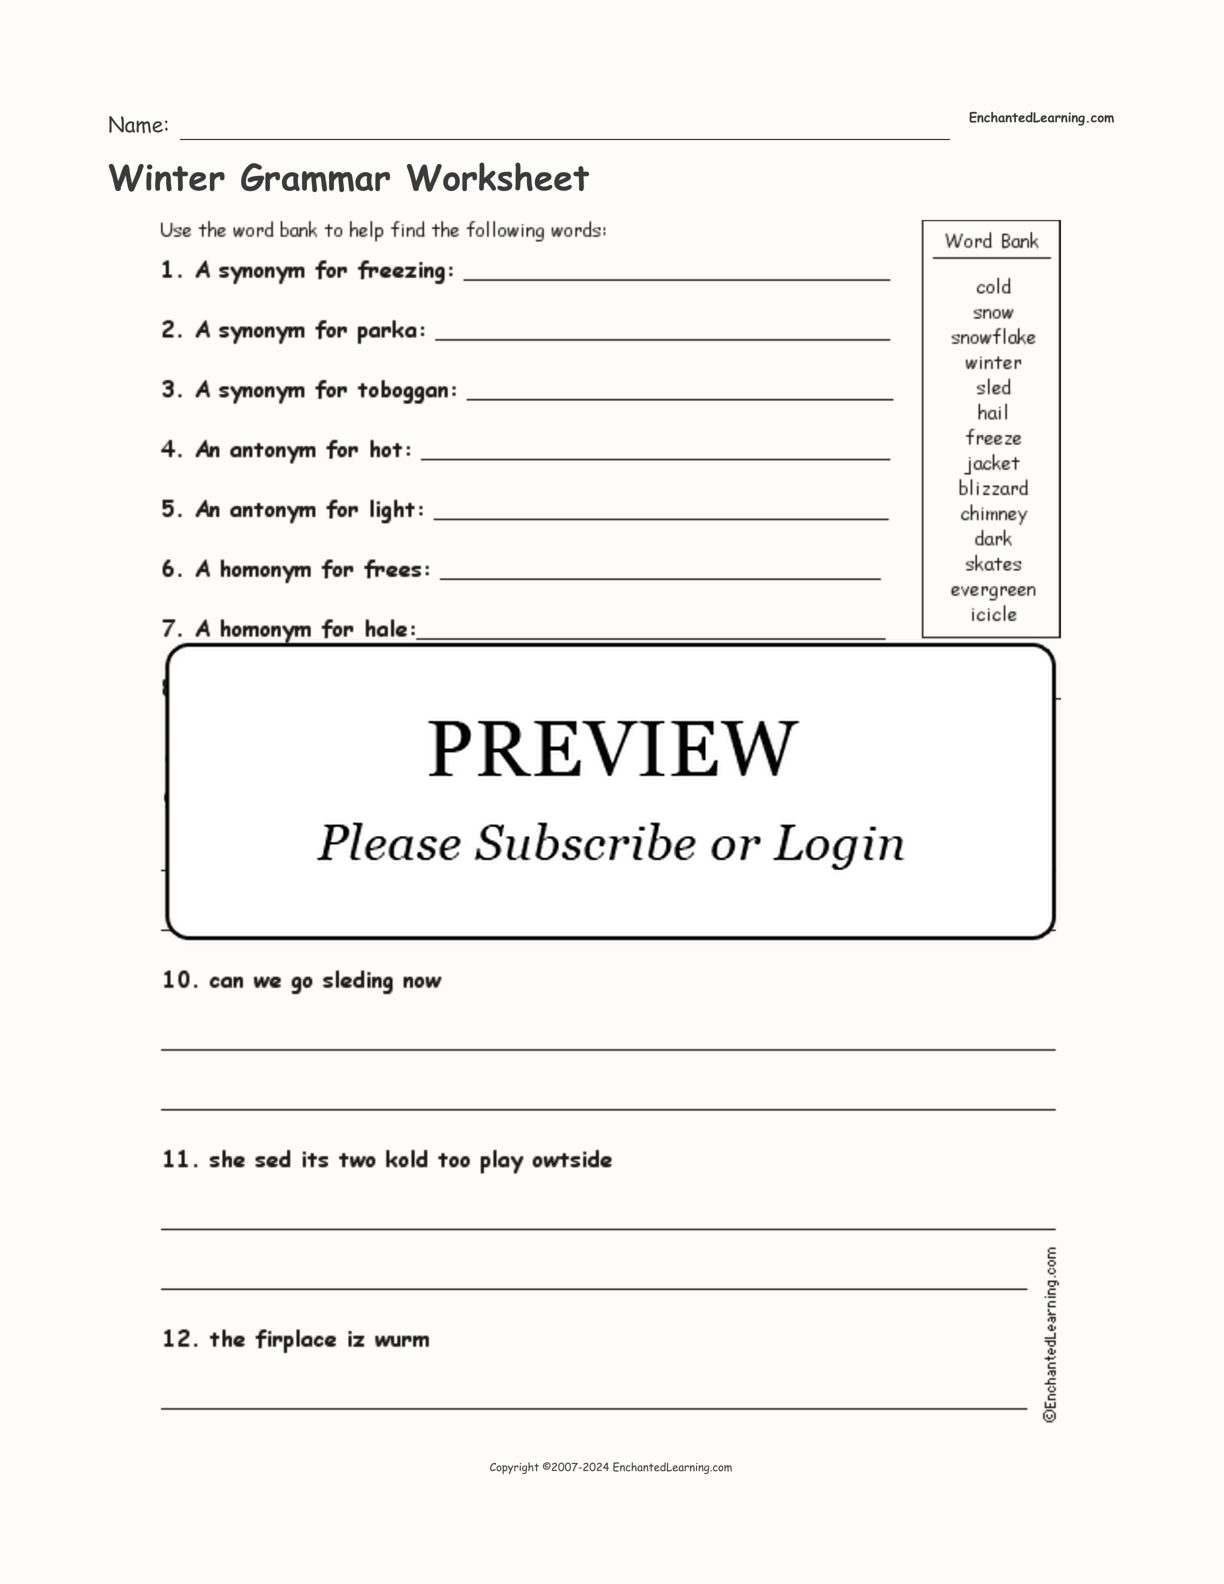 Winter Grammar Worksheet interactive worksheet page 1